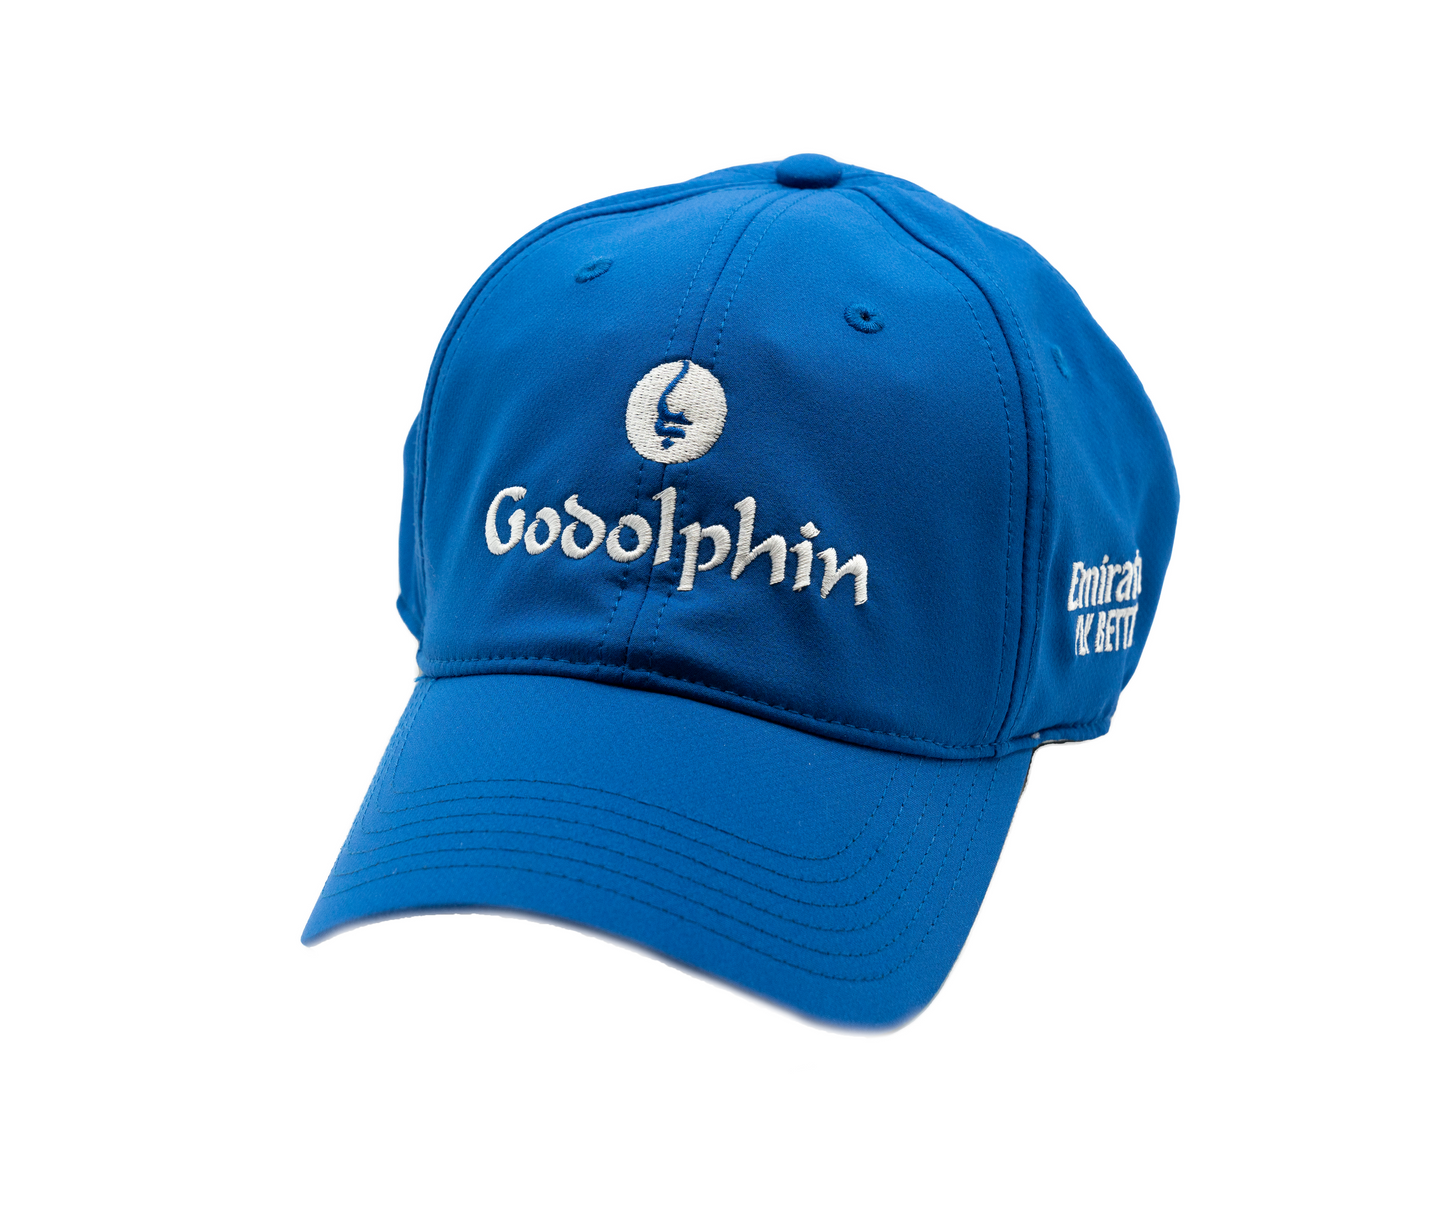 Godolphin Blue Hat